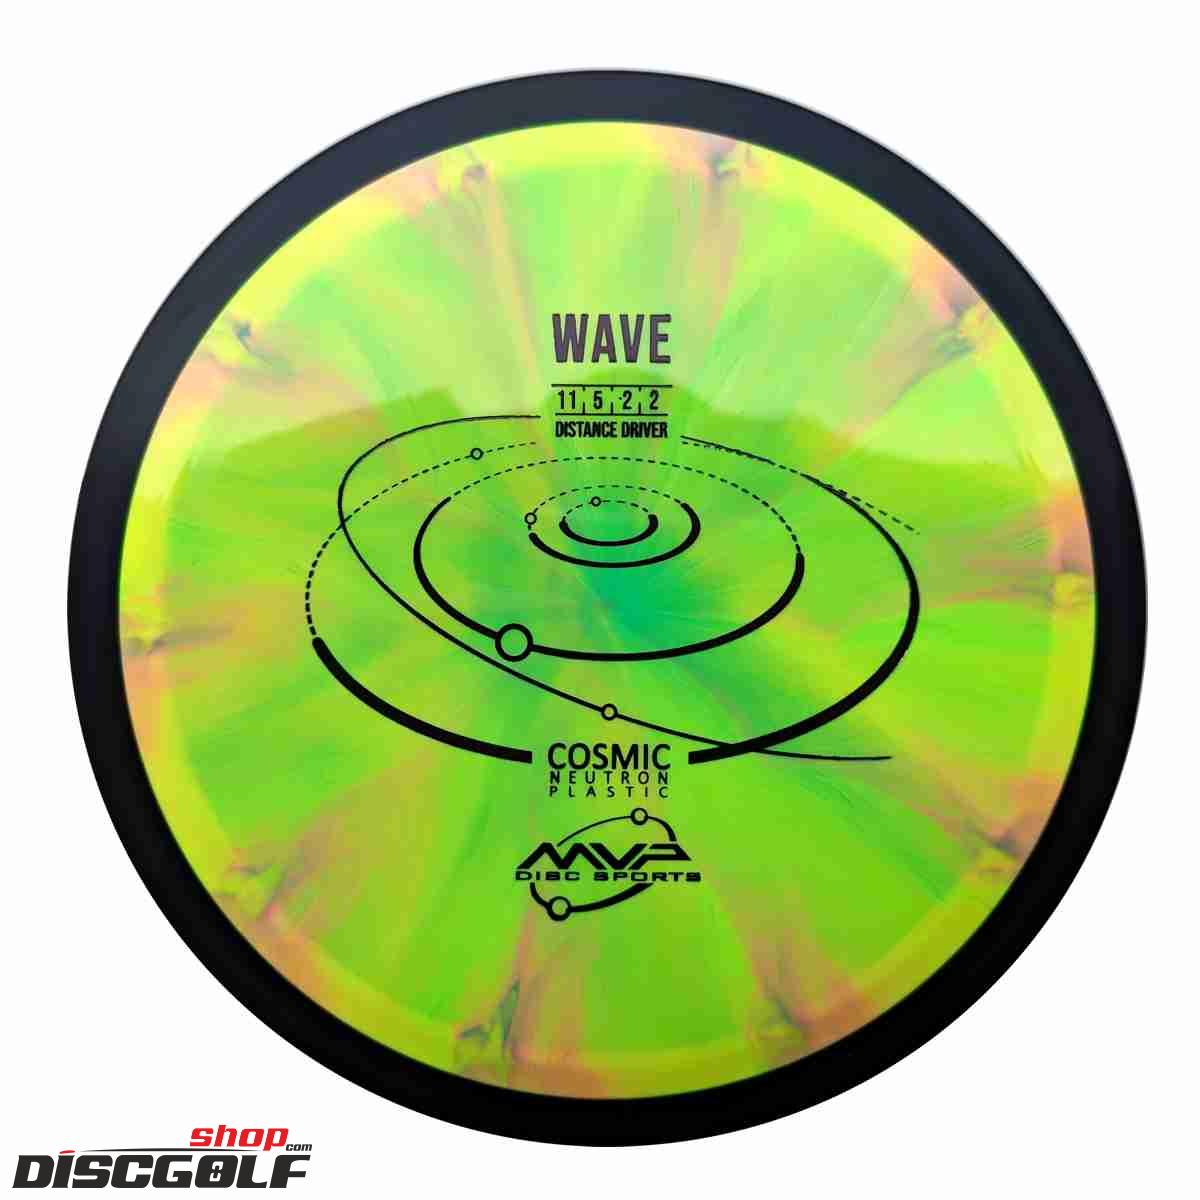 MVP Wave Cosmic Neutron (discgolf)